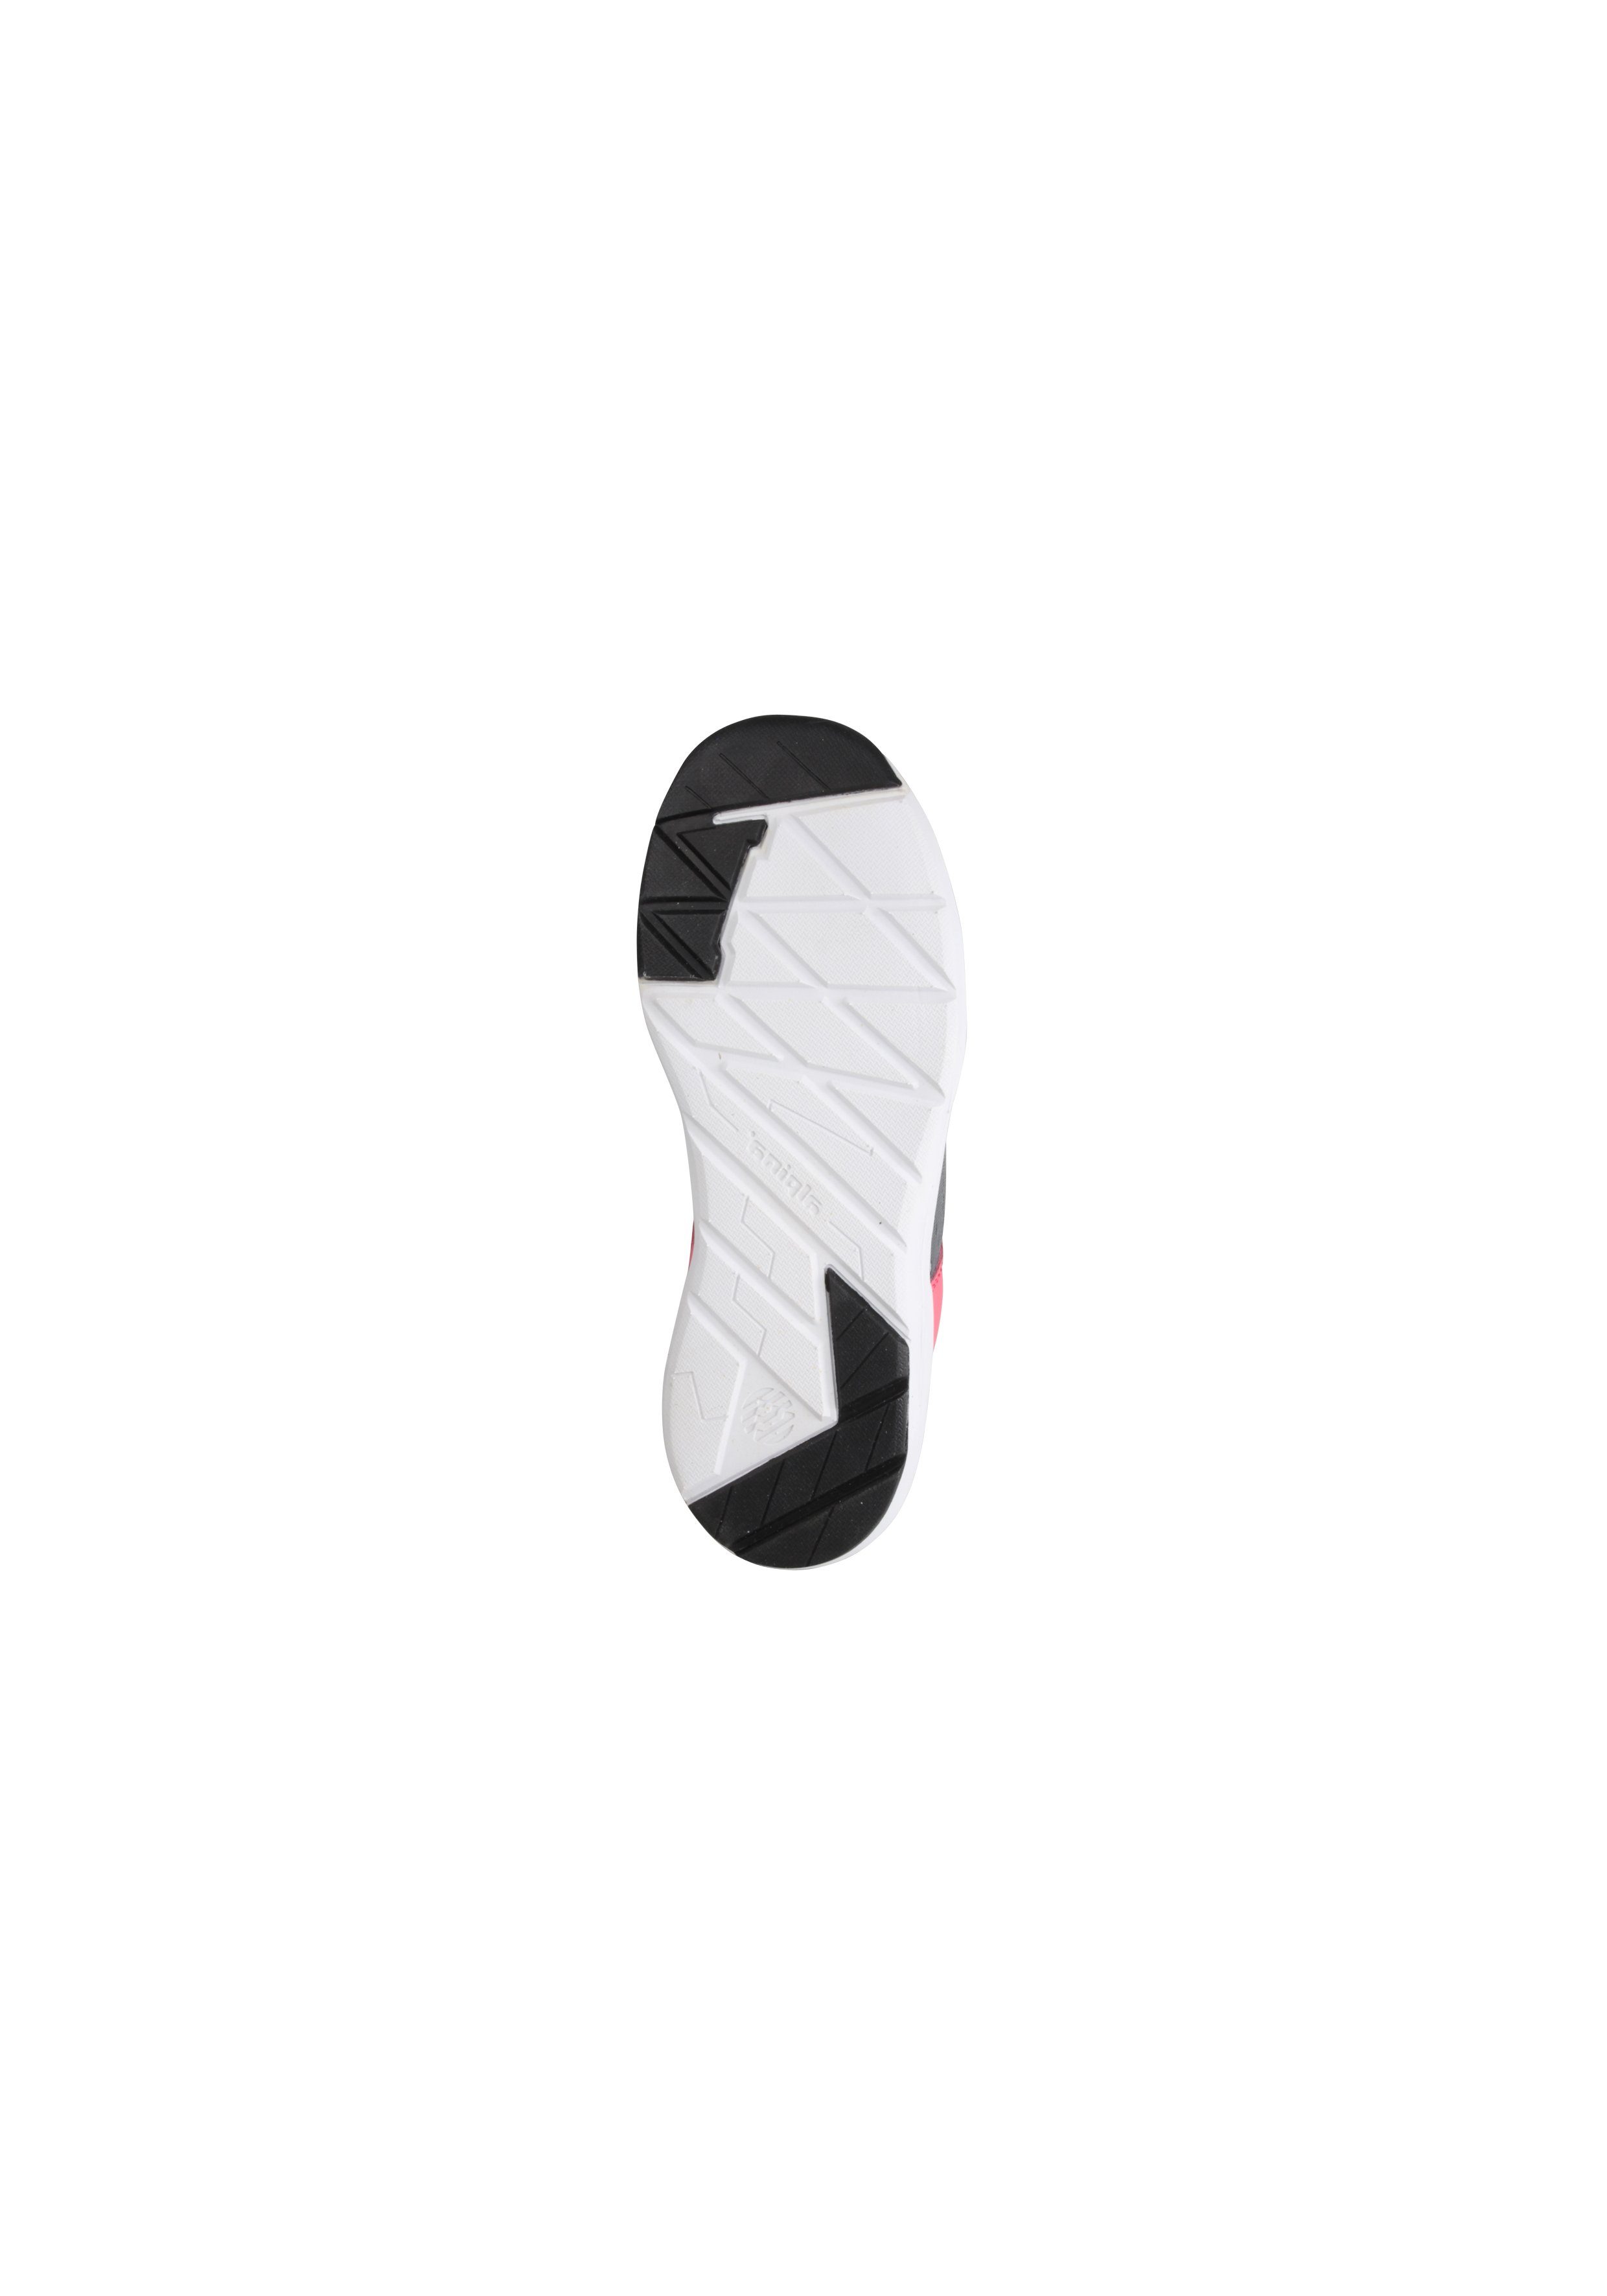 Sneaker Fun Sports Ferse grau-pink mit verstärkter Alpina